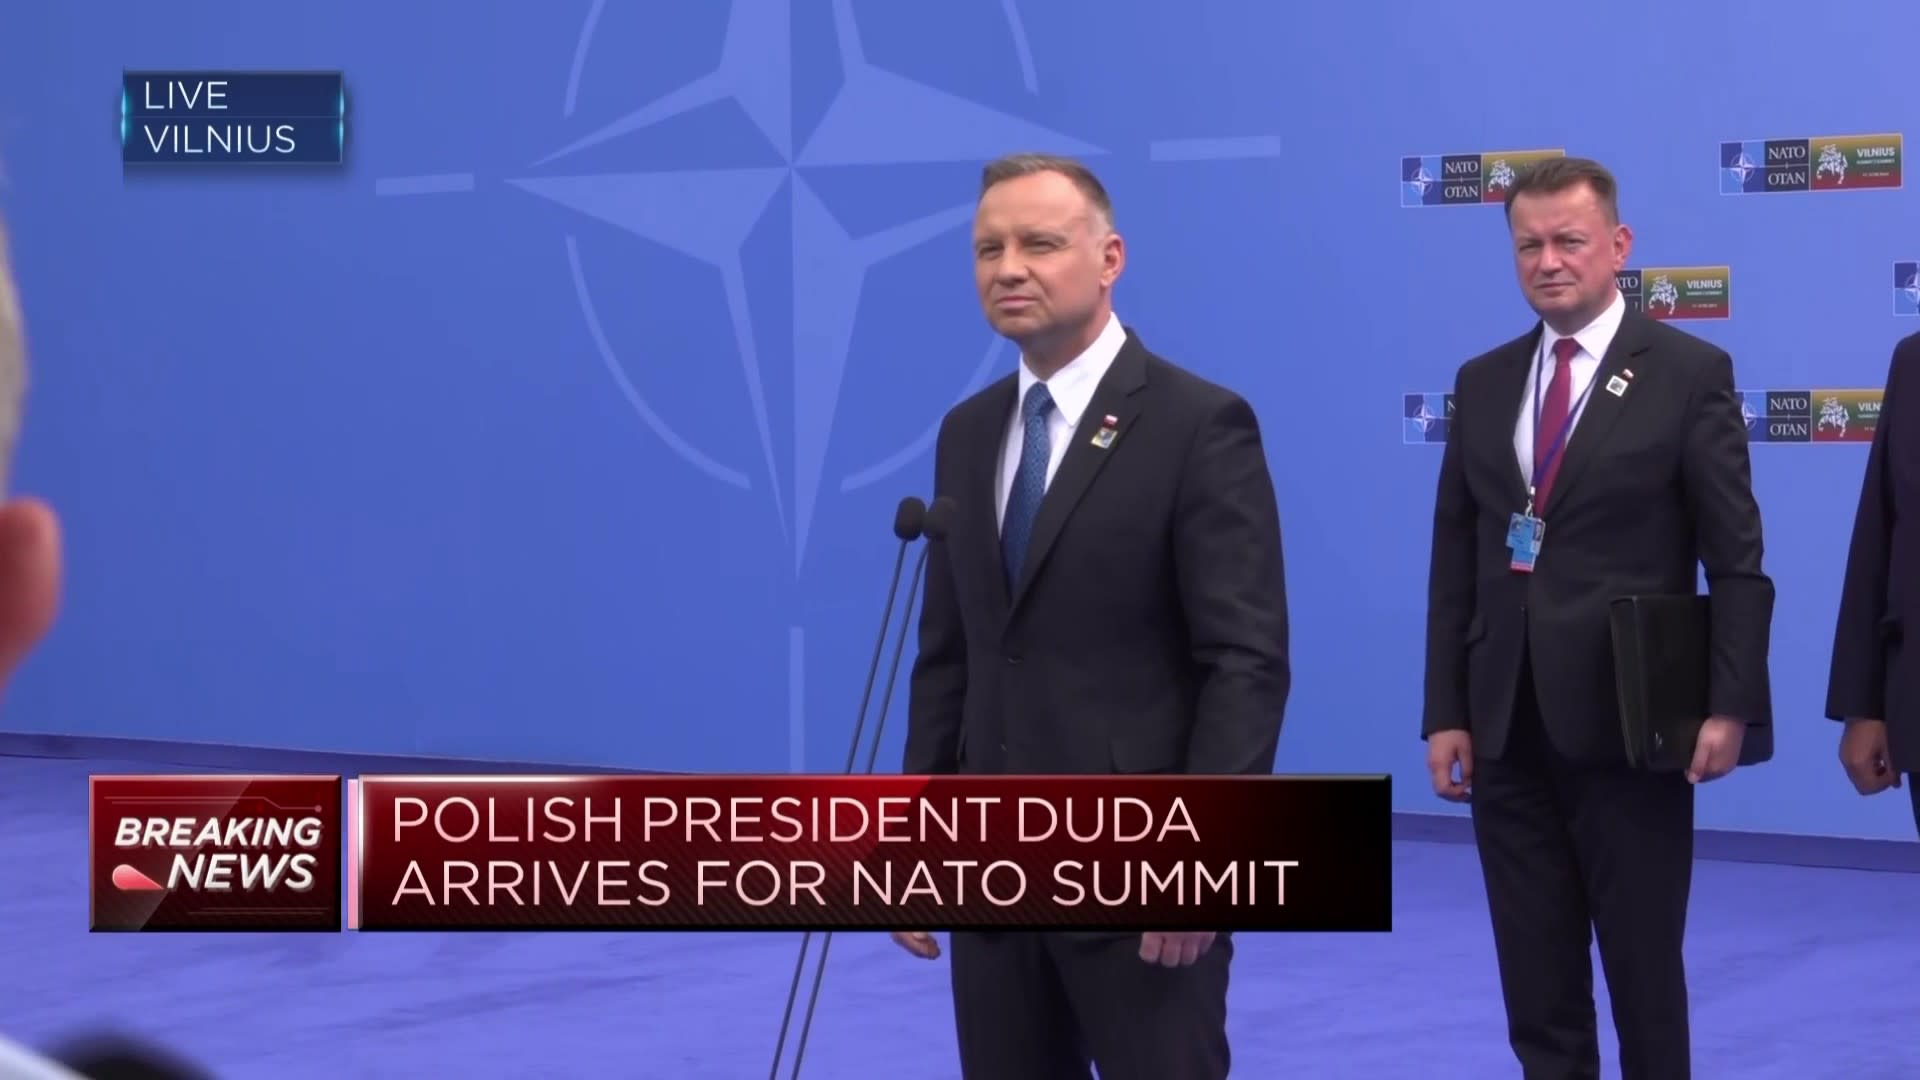 Open the doors to NATO and the EU, says Poland's President Duda